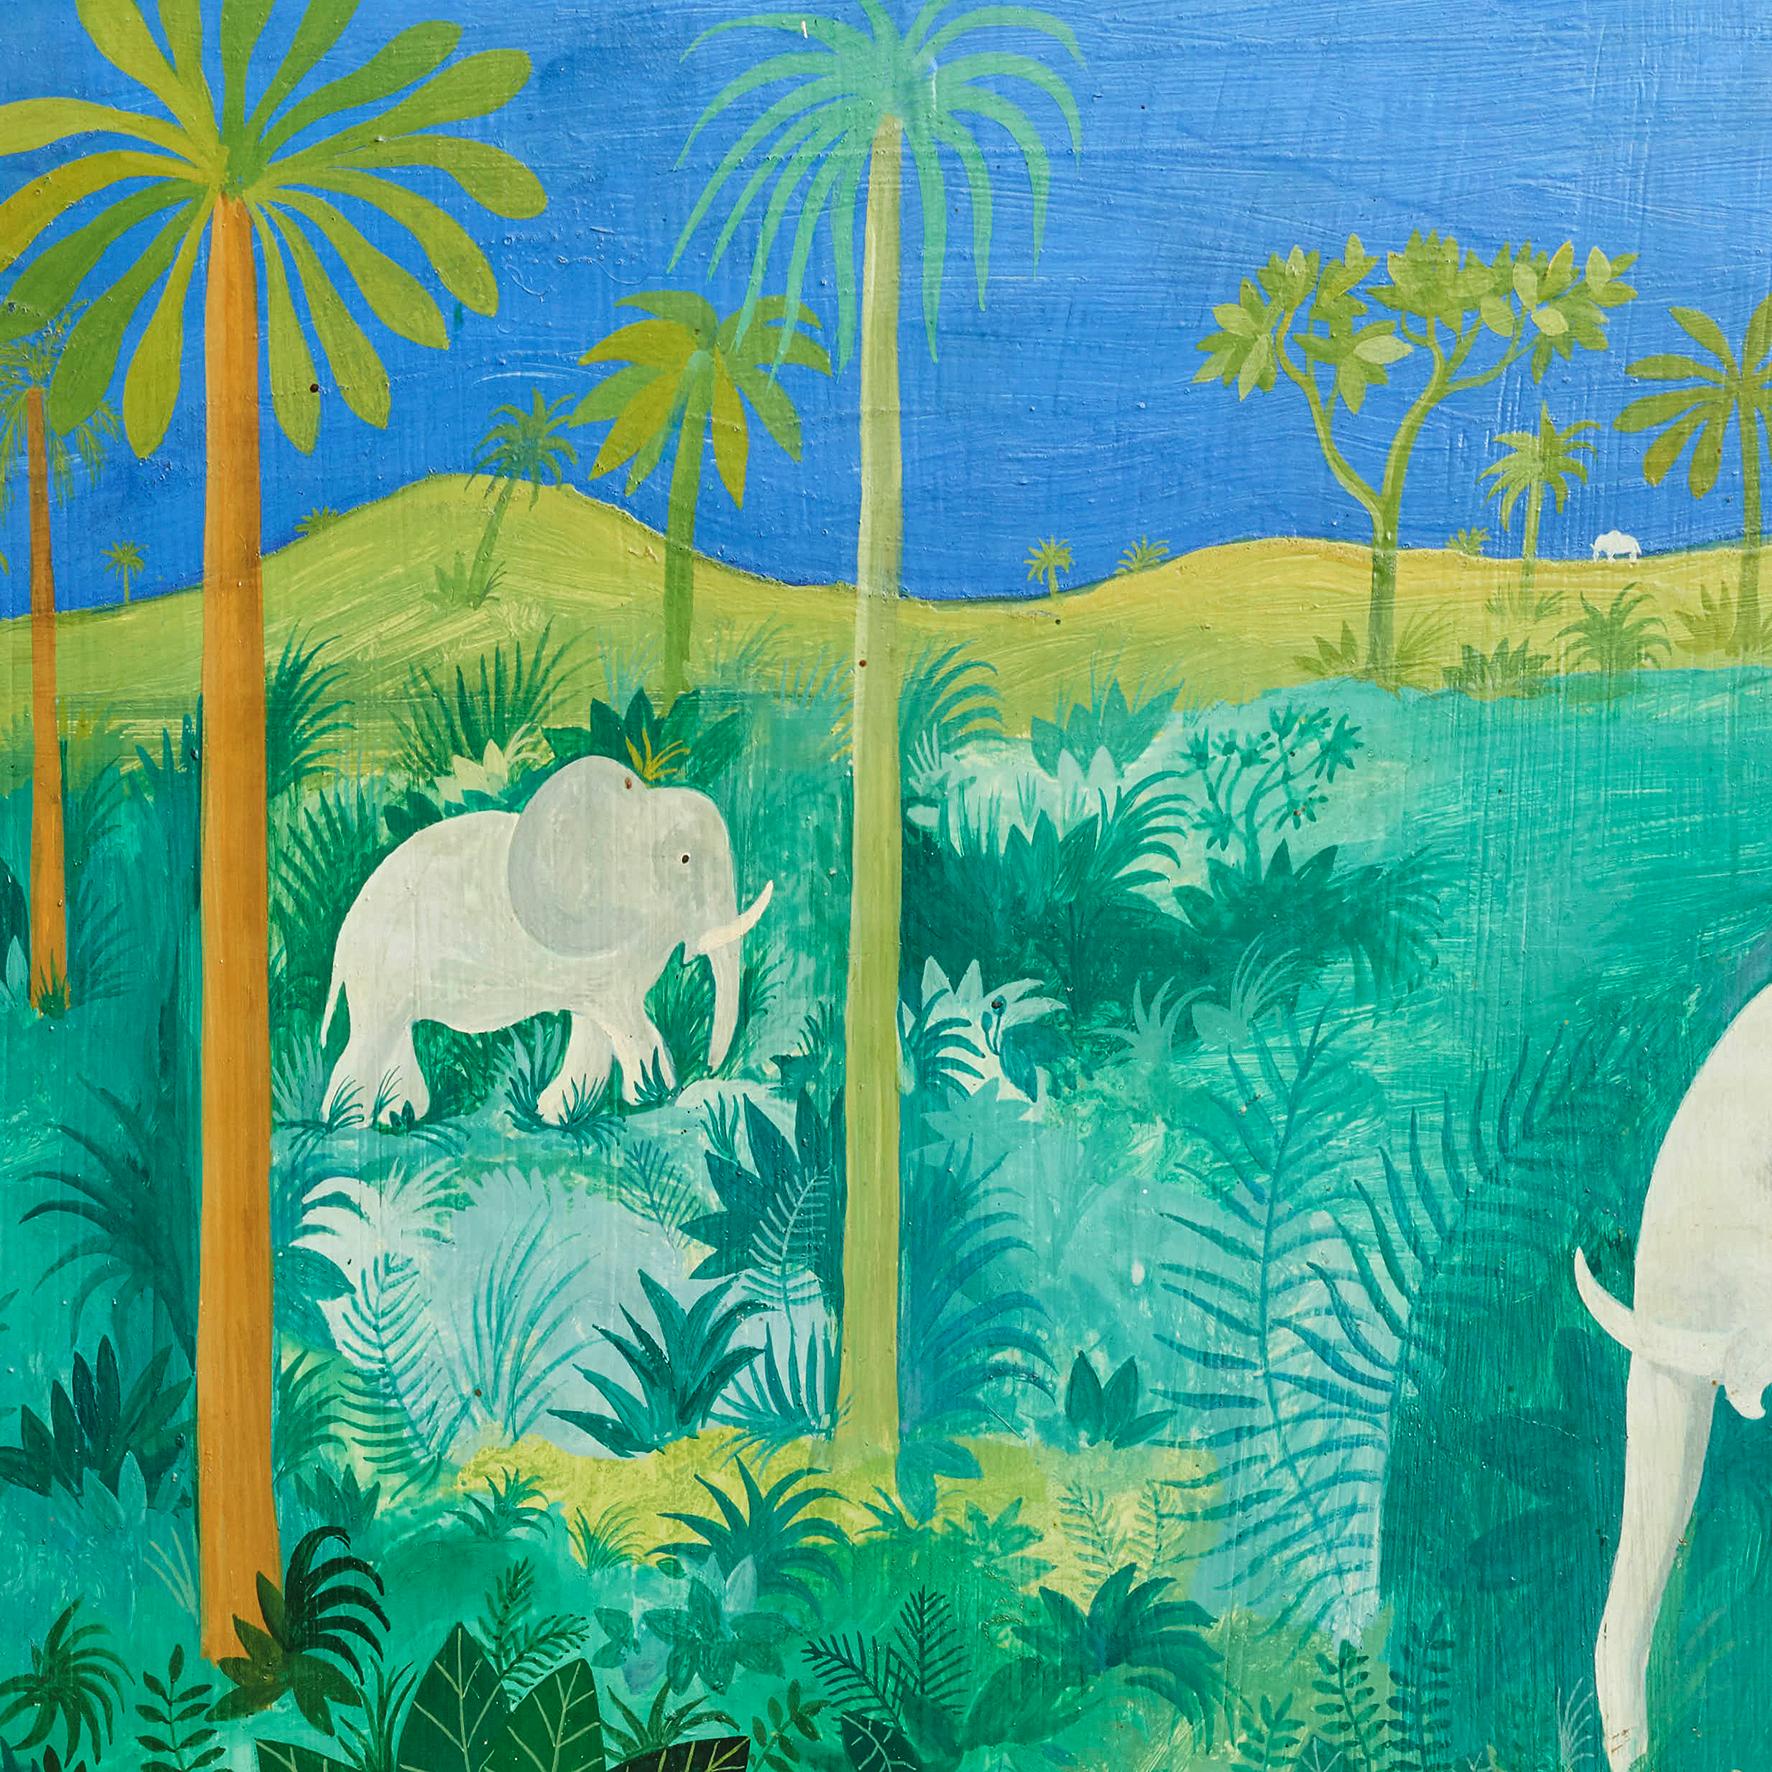 European Original Hans Scherfig Painting of White Elephants in the Jungle, Denmark, 1947